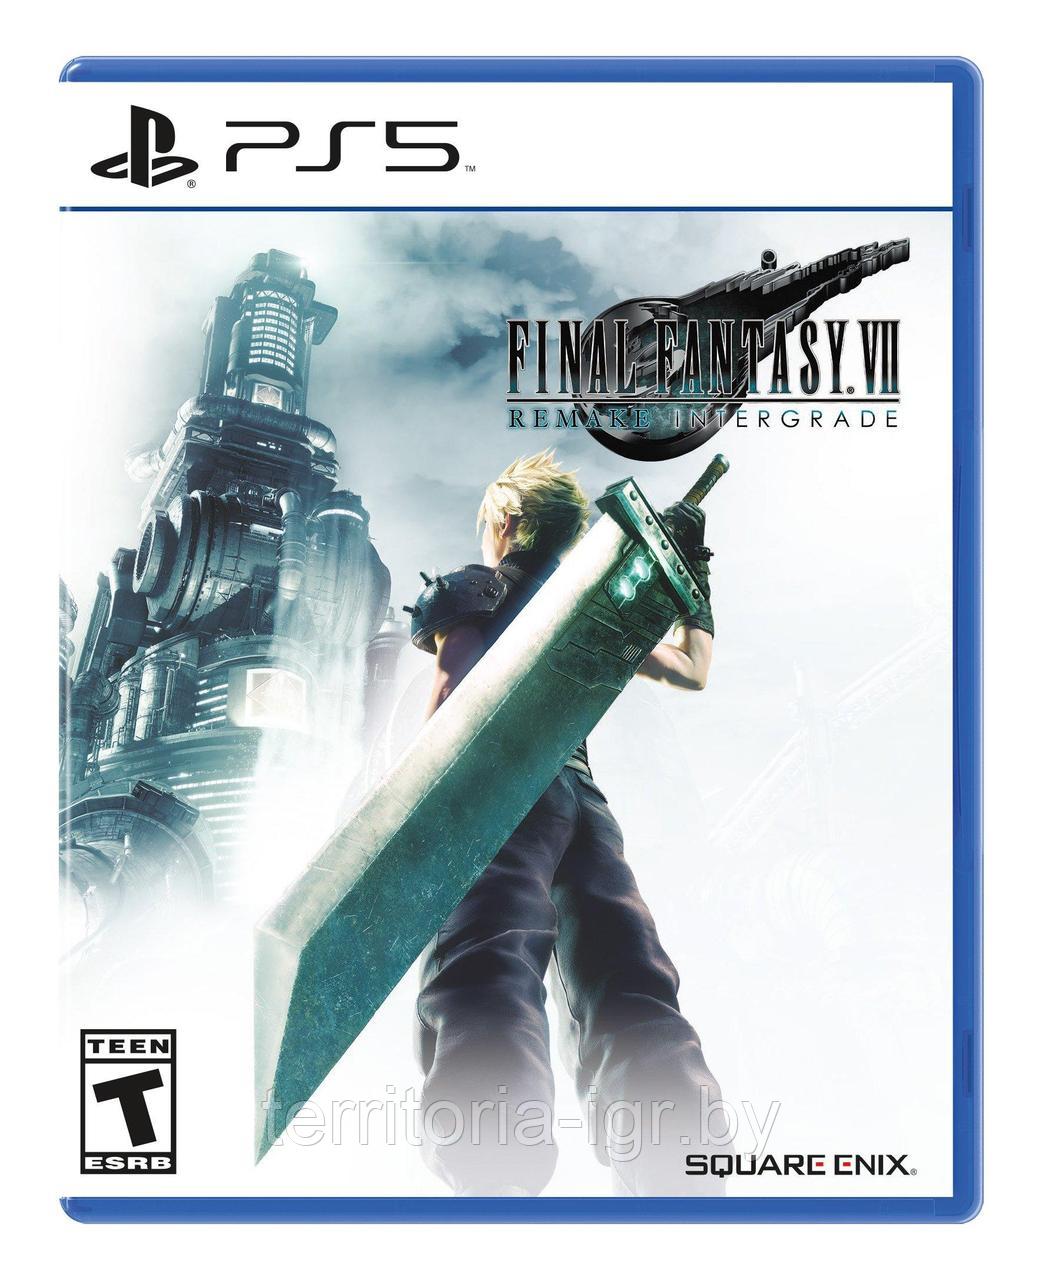 Final Fantasy VII Remake Intergrade PS5 (Английская версия)